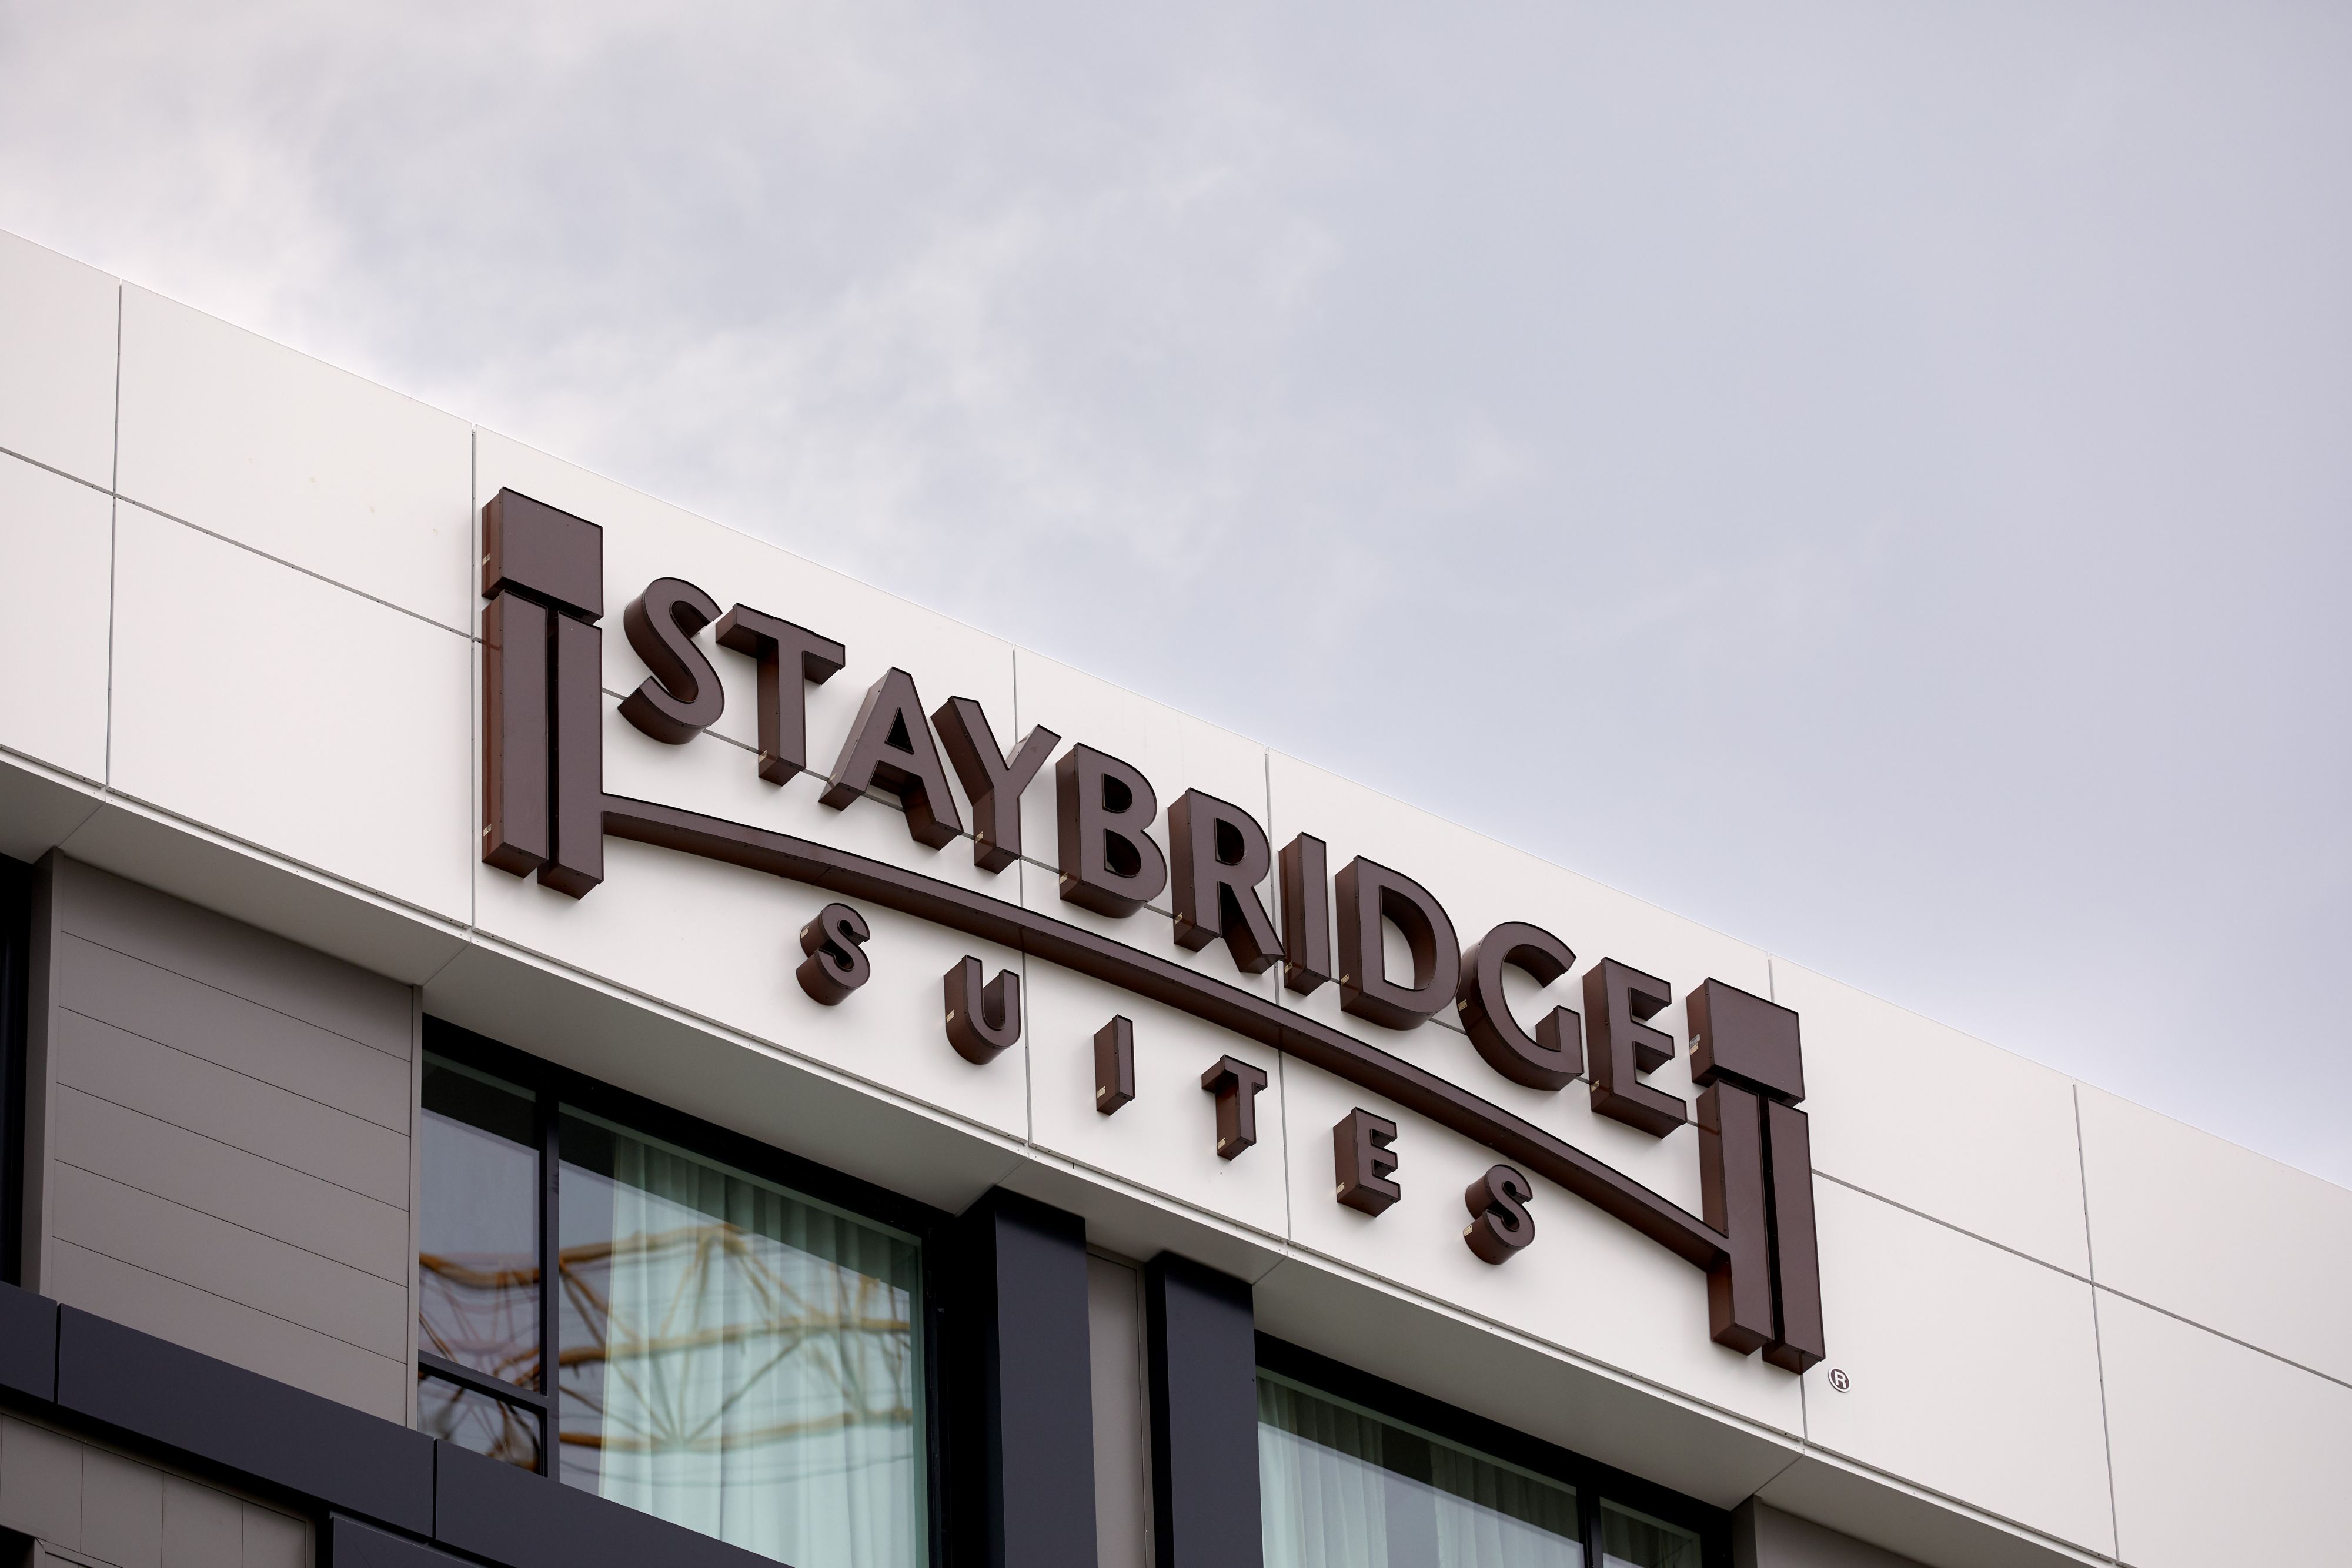 staybridge-suites-seattle-5552781245-original.jpg